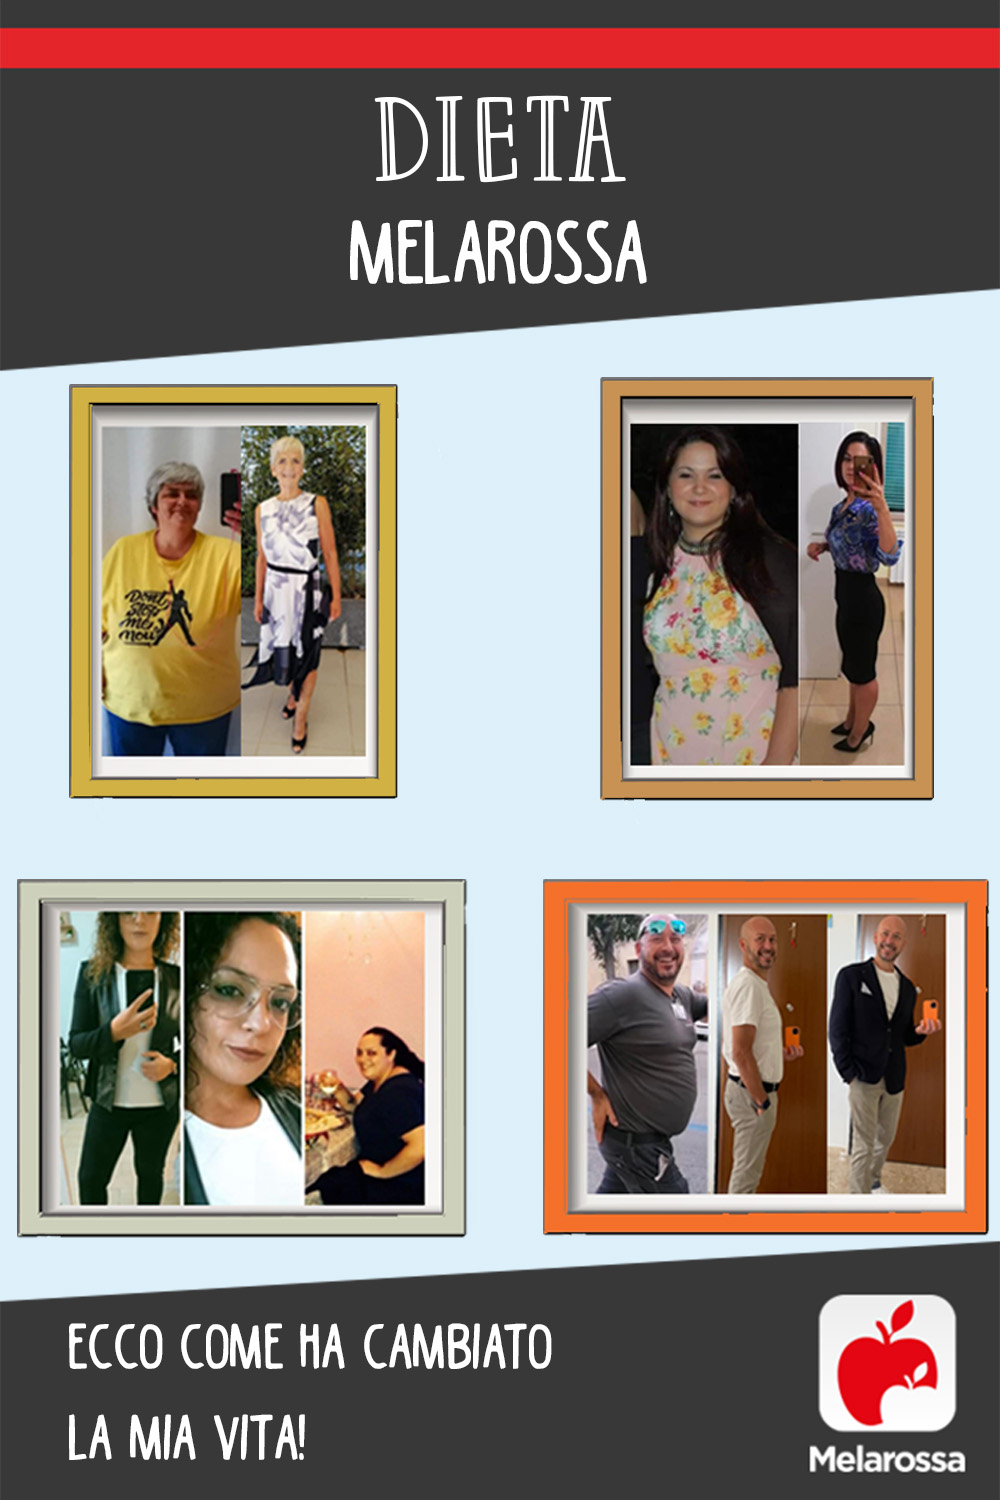 testimonianze Melarossa: storie di successo 